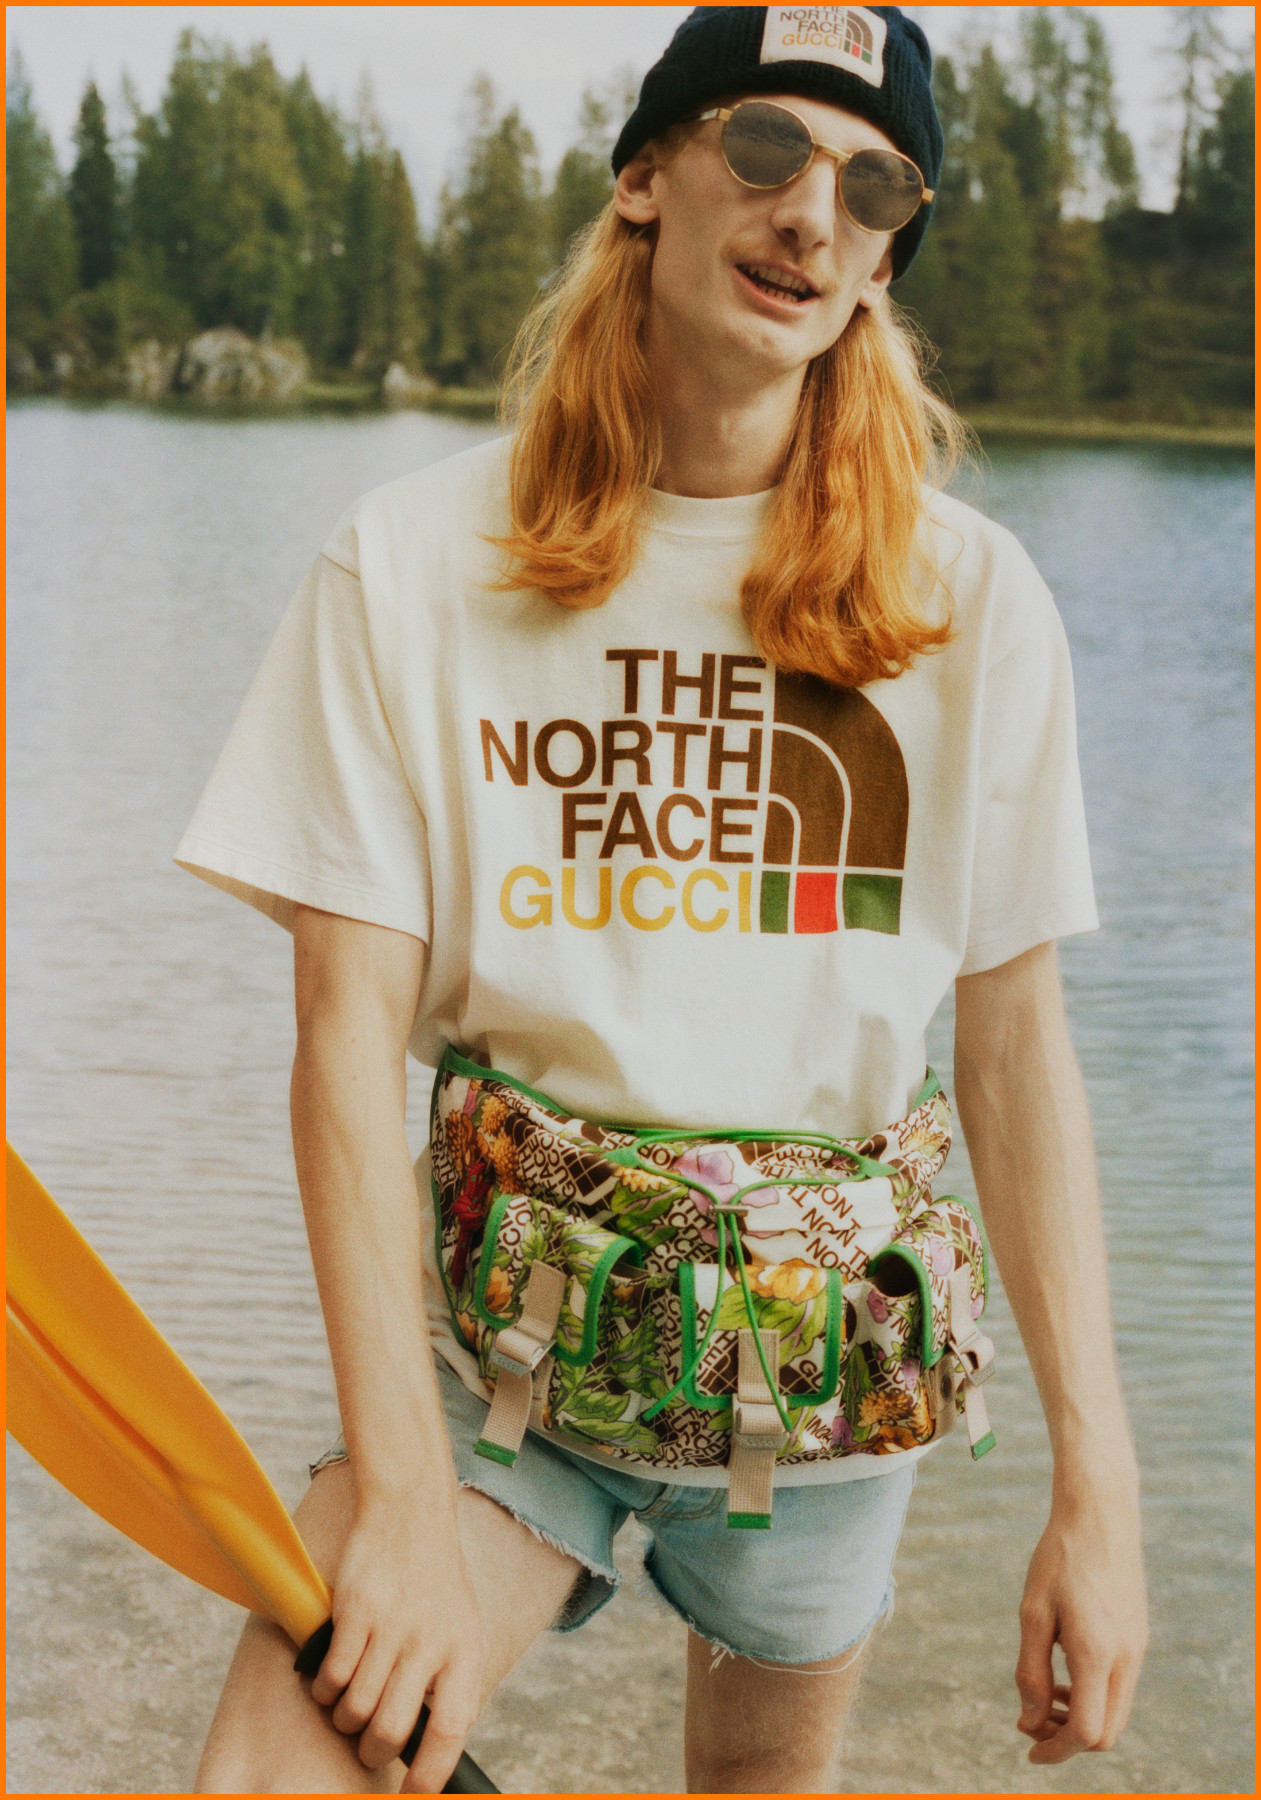 Gucci x The North Face Collaboration